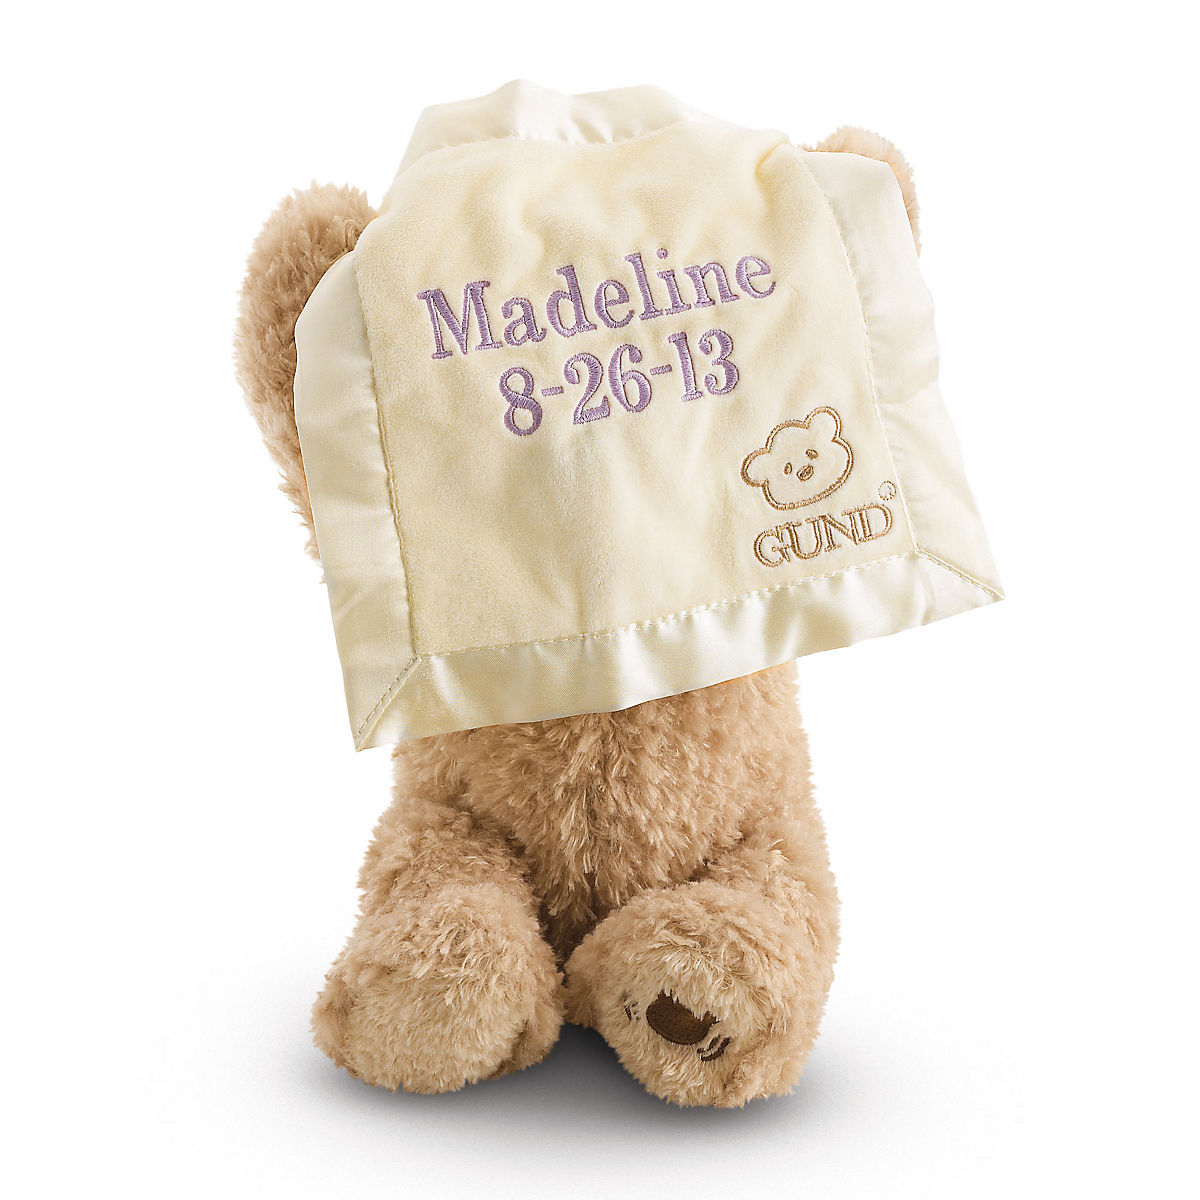 Peek A Boo Teddy Bear Toddler Kids ChildrenPlay Plush Blanket Don't buy bargains 